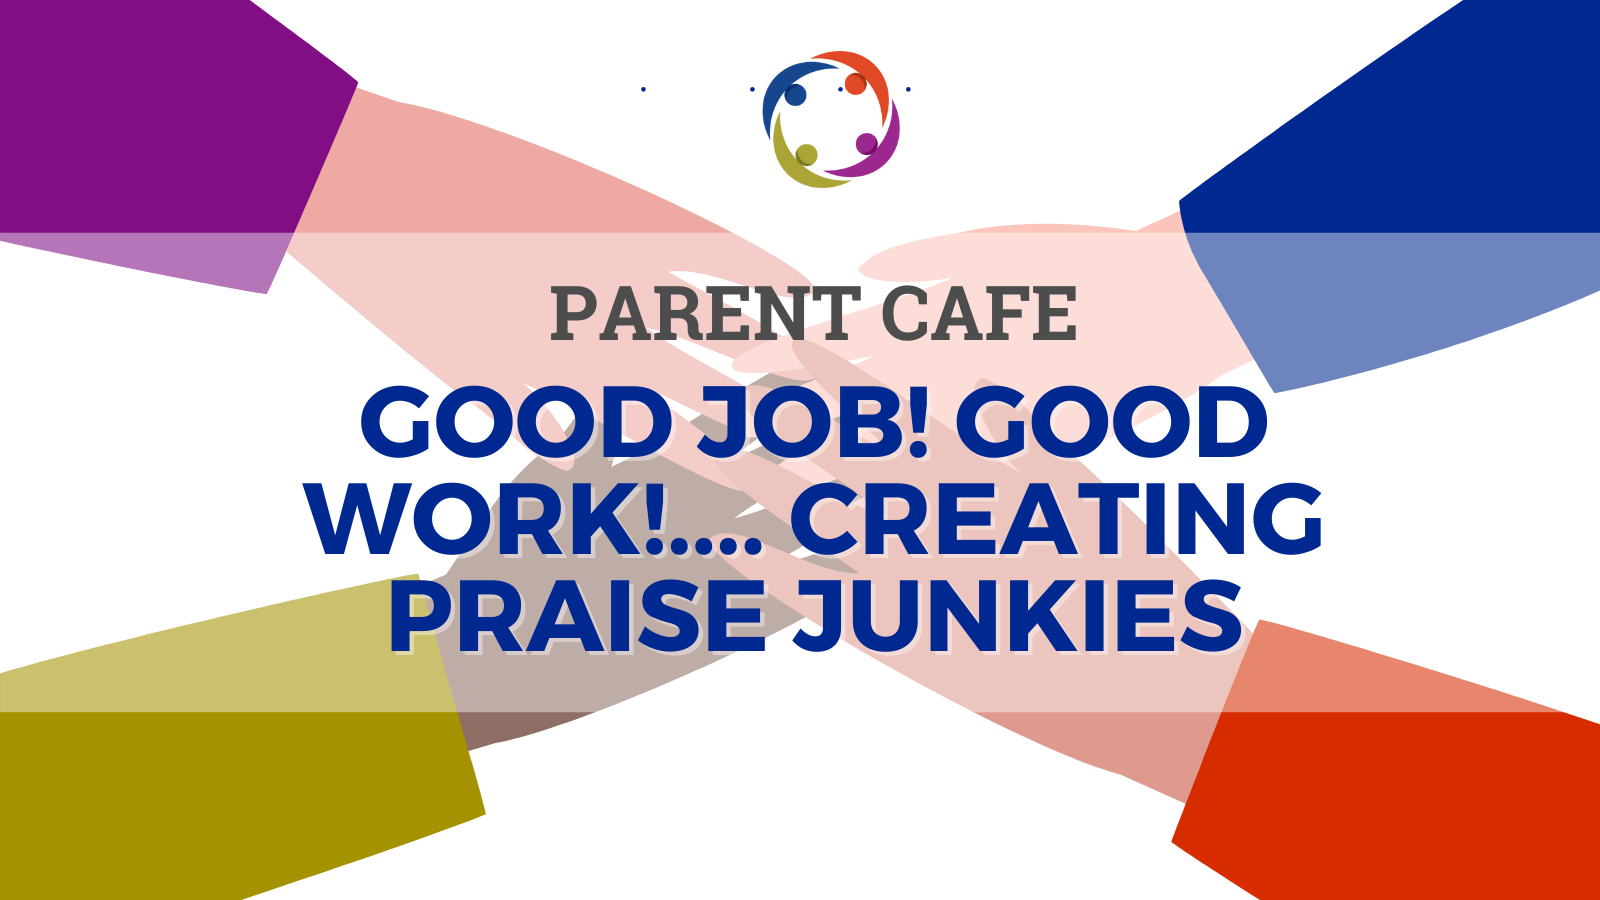 Good Job! Good Work!... Creating Praise Junkies